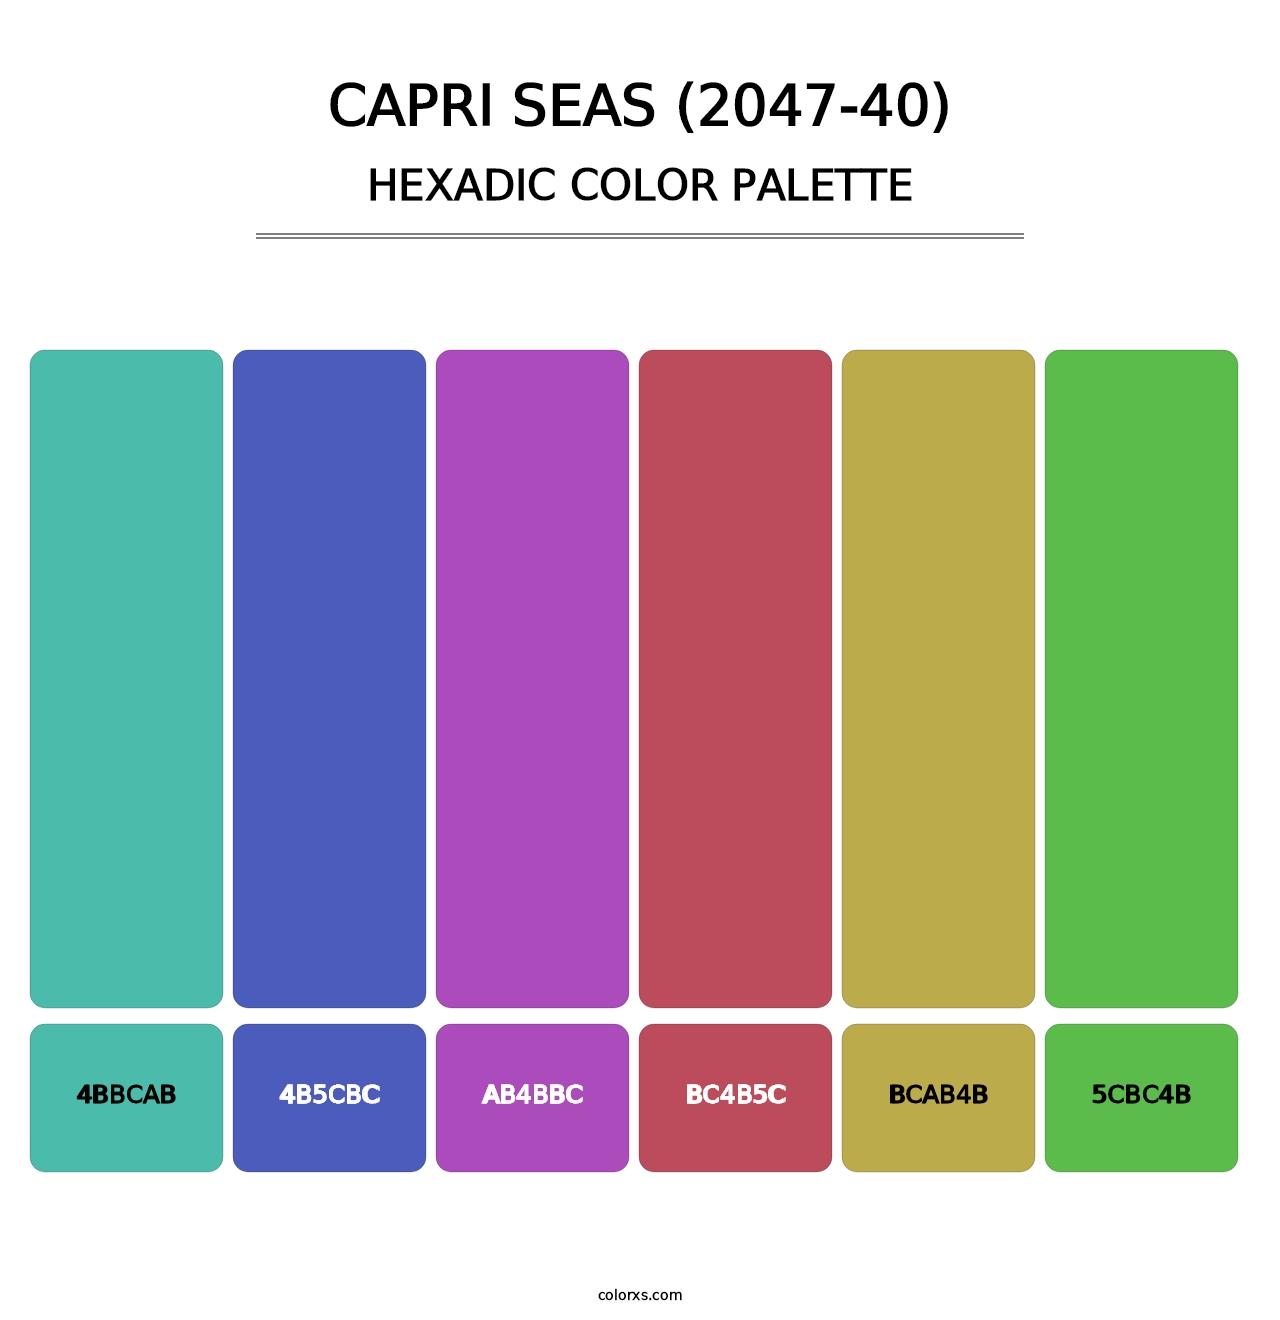 Capri Seas (2047-40) - Hexadic Color Palette